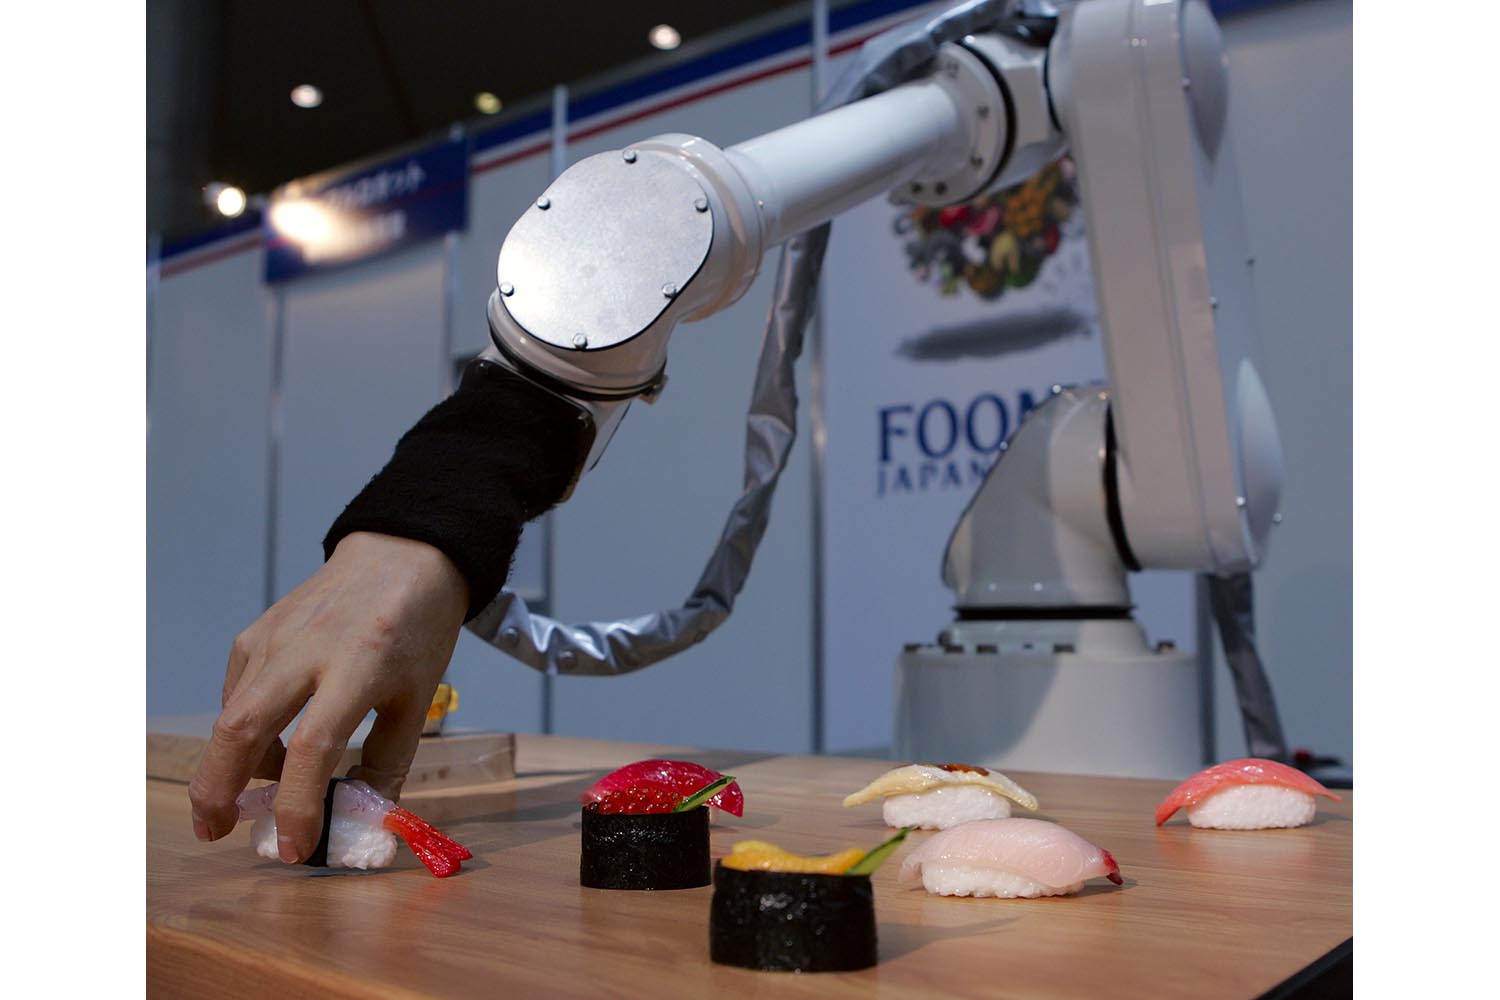 Especial mundo robot. Este robot de suaves dedos humanizados es capaz de manipular cosas delicadas